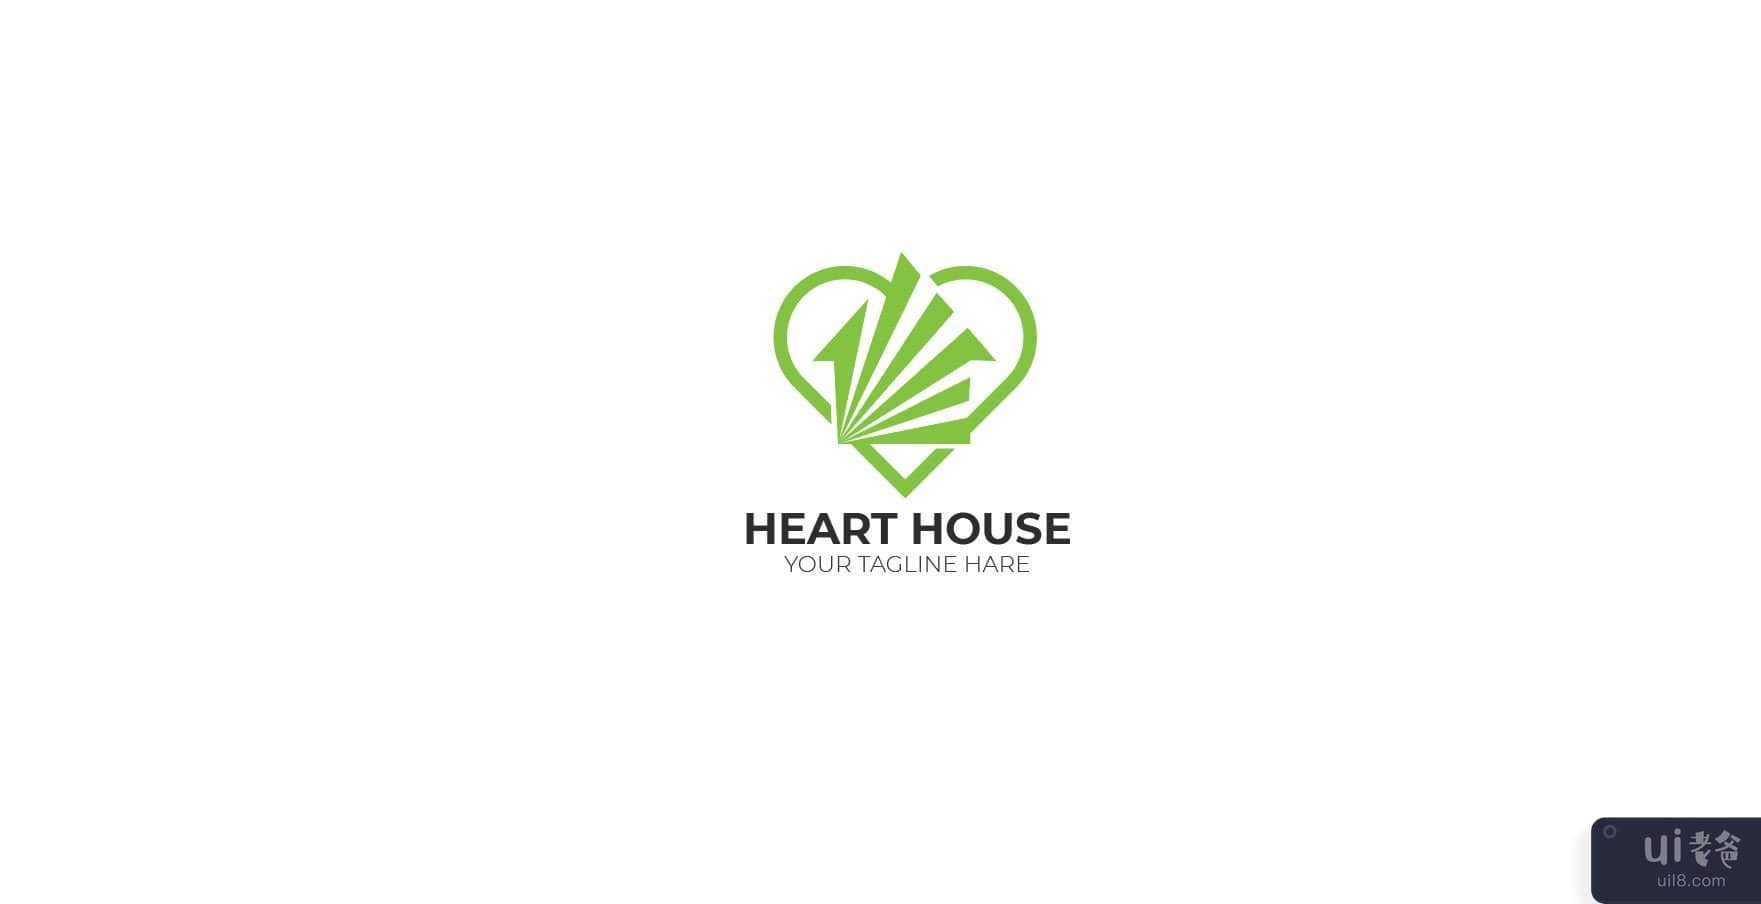 心之家徽标(Heart House logo)插图2